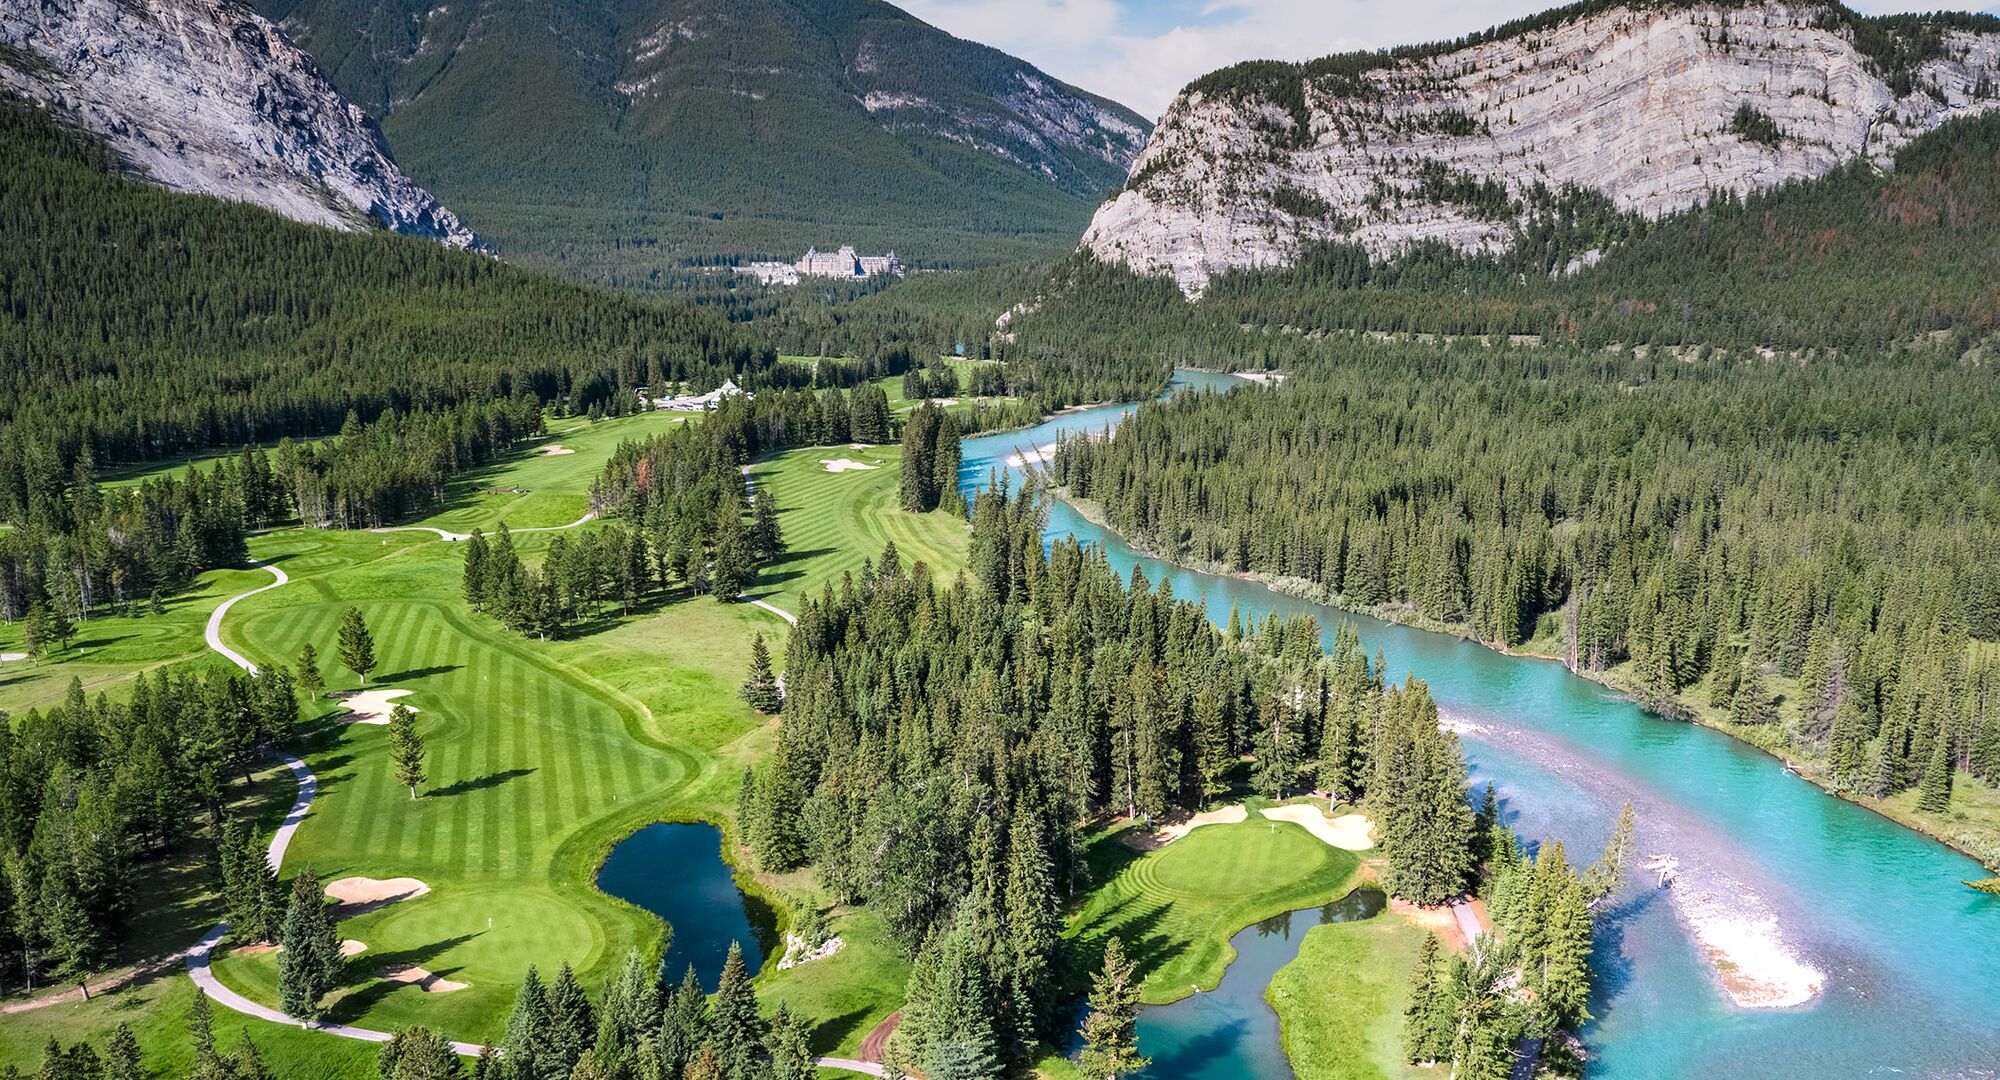 Fairmont Banff Springs Golf Course